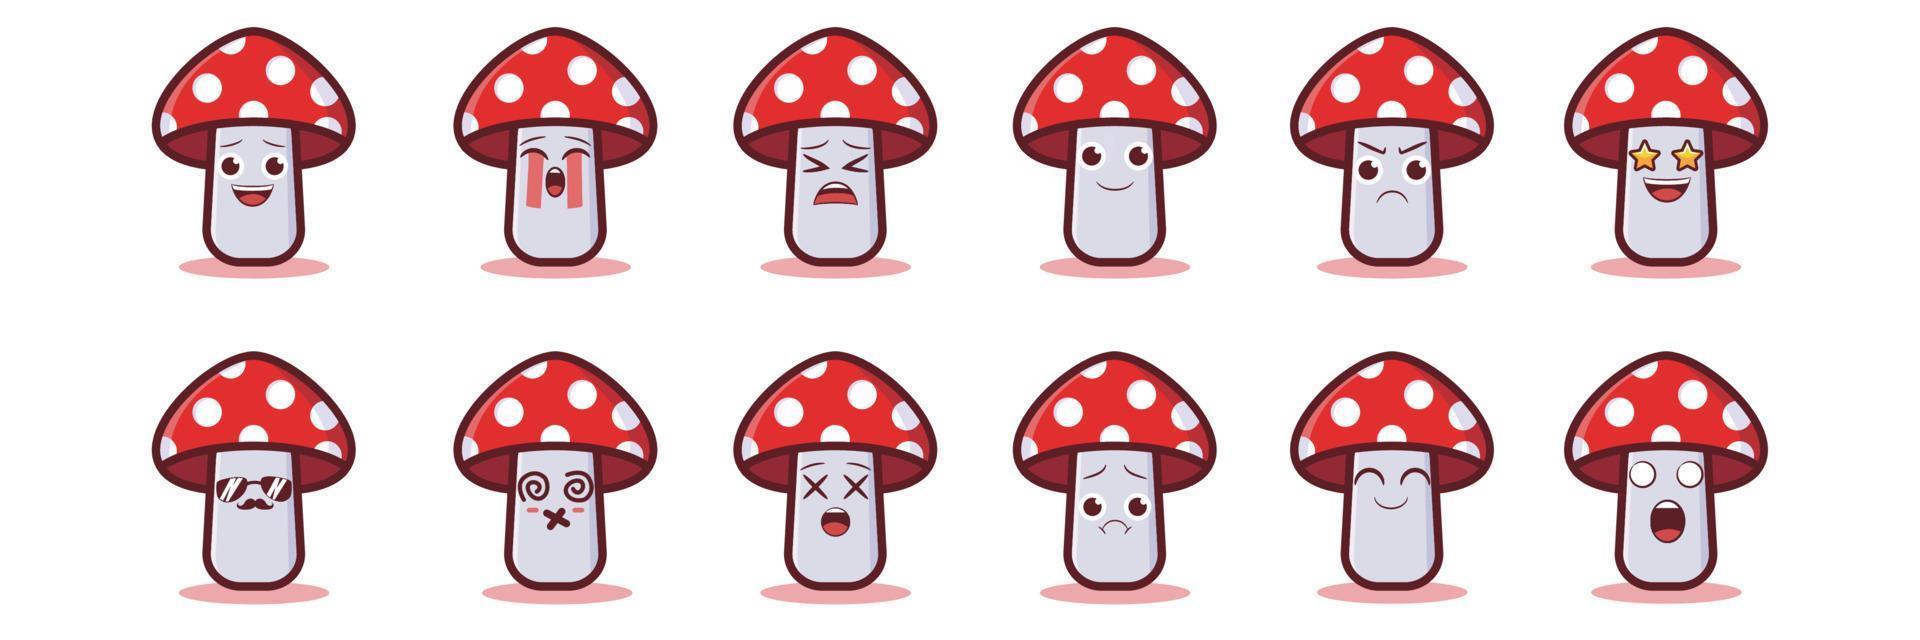 mushroom vector with 12 emoticons set